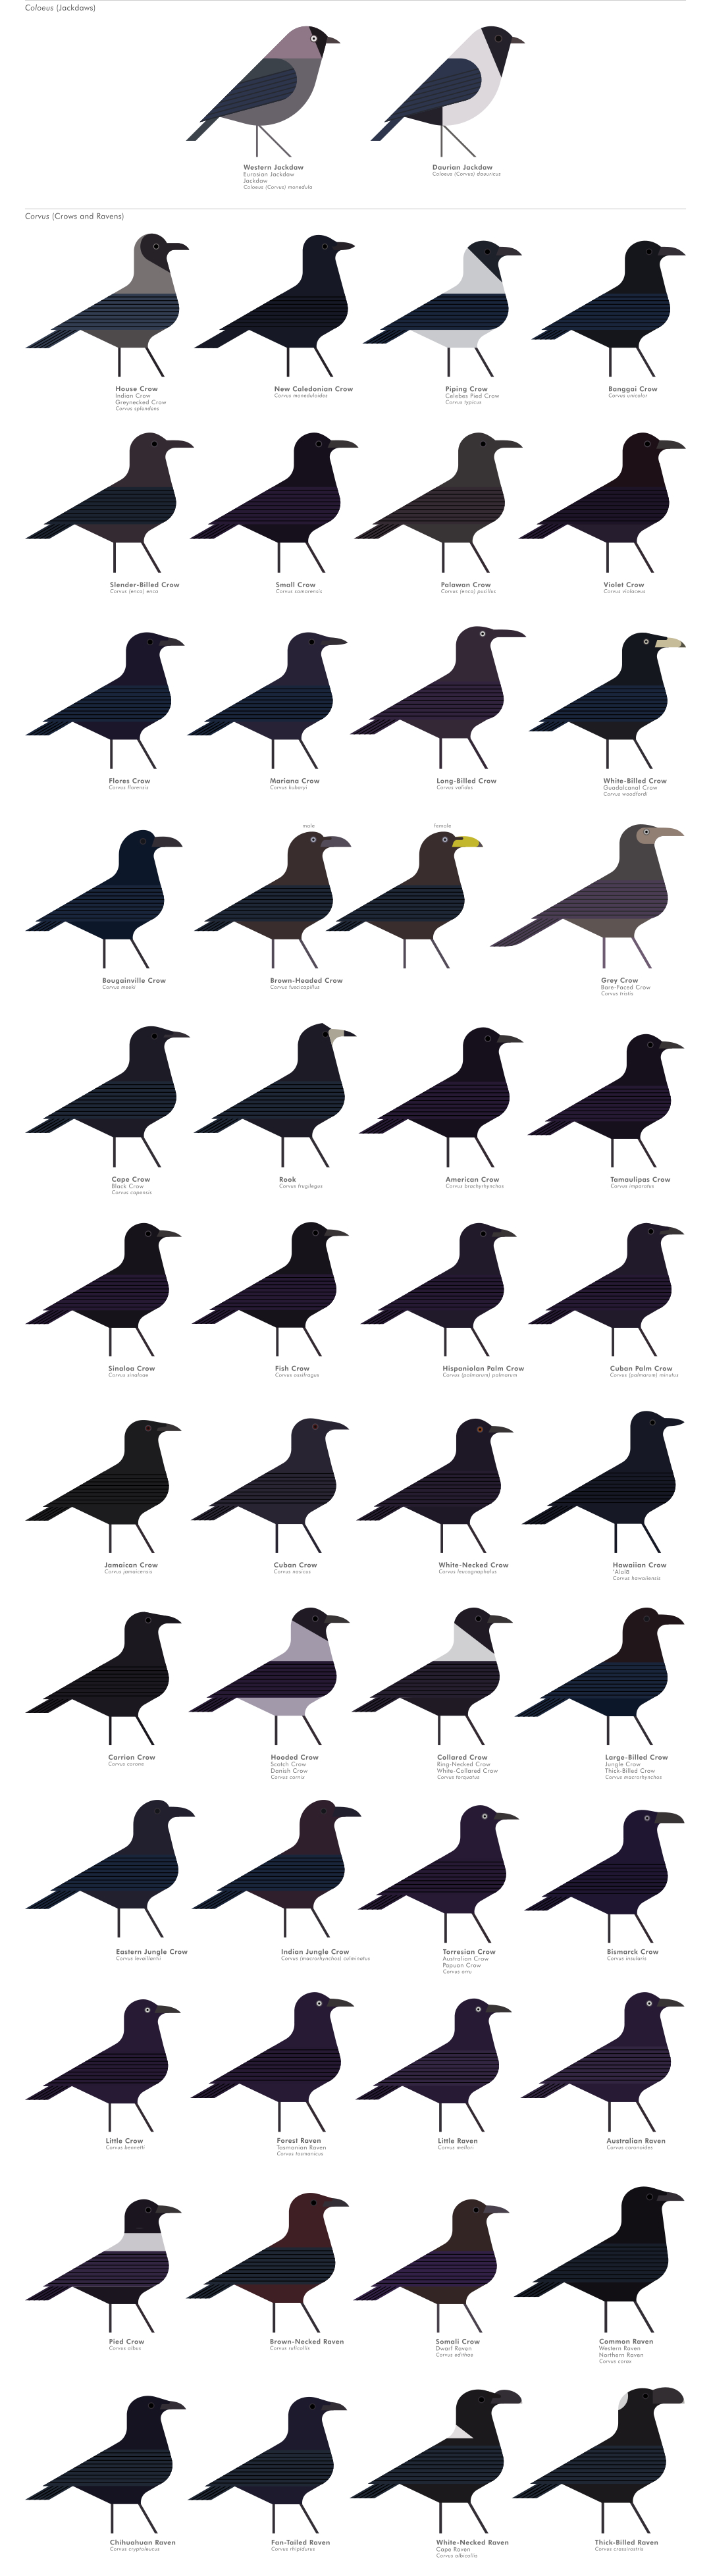 scott partridge - AVE - avian vector encyclopedia - corvids - bird vector art